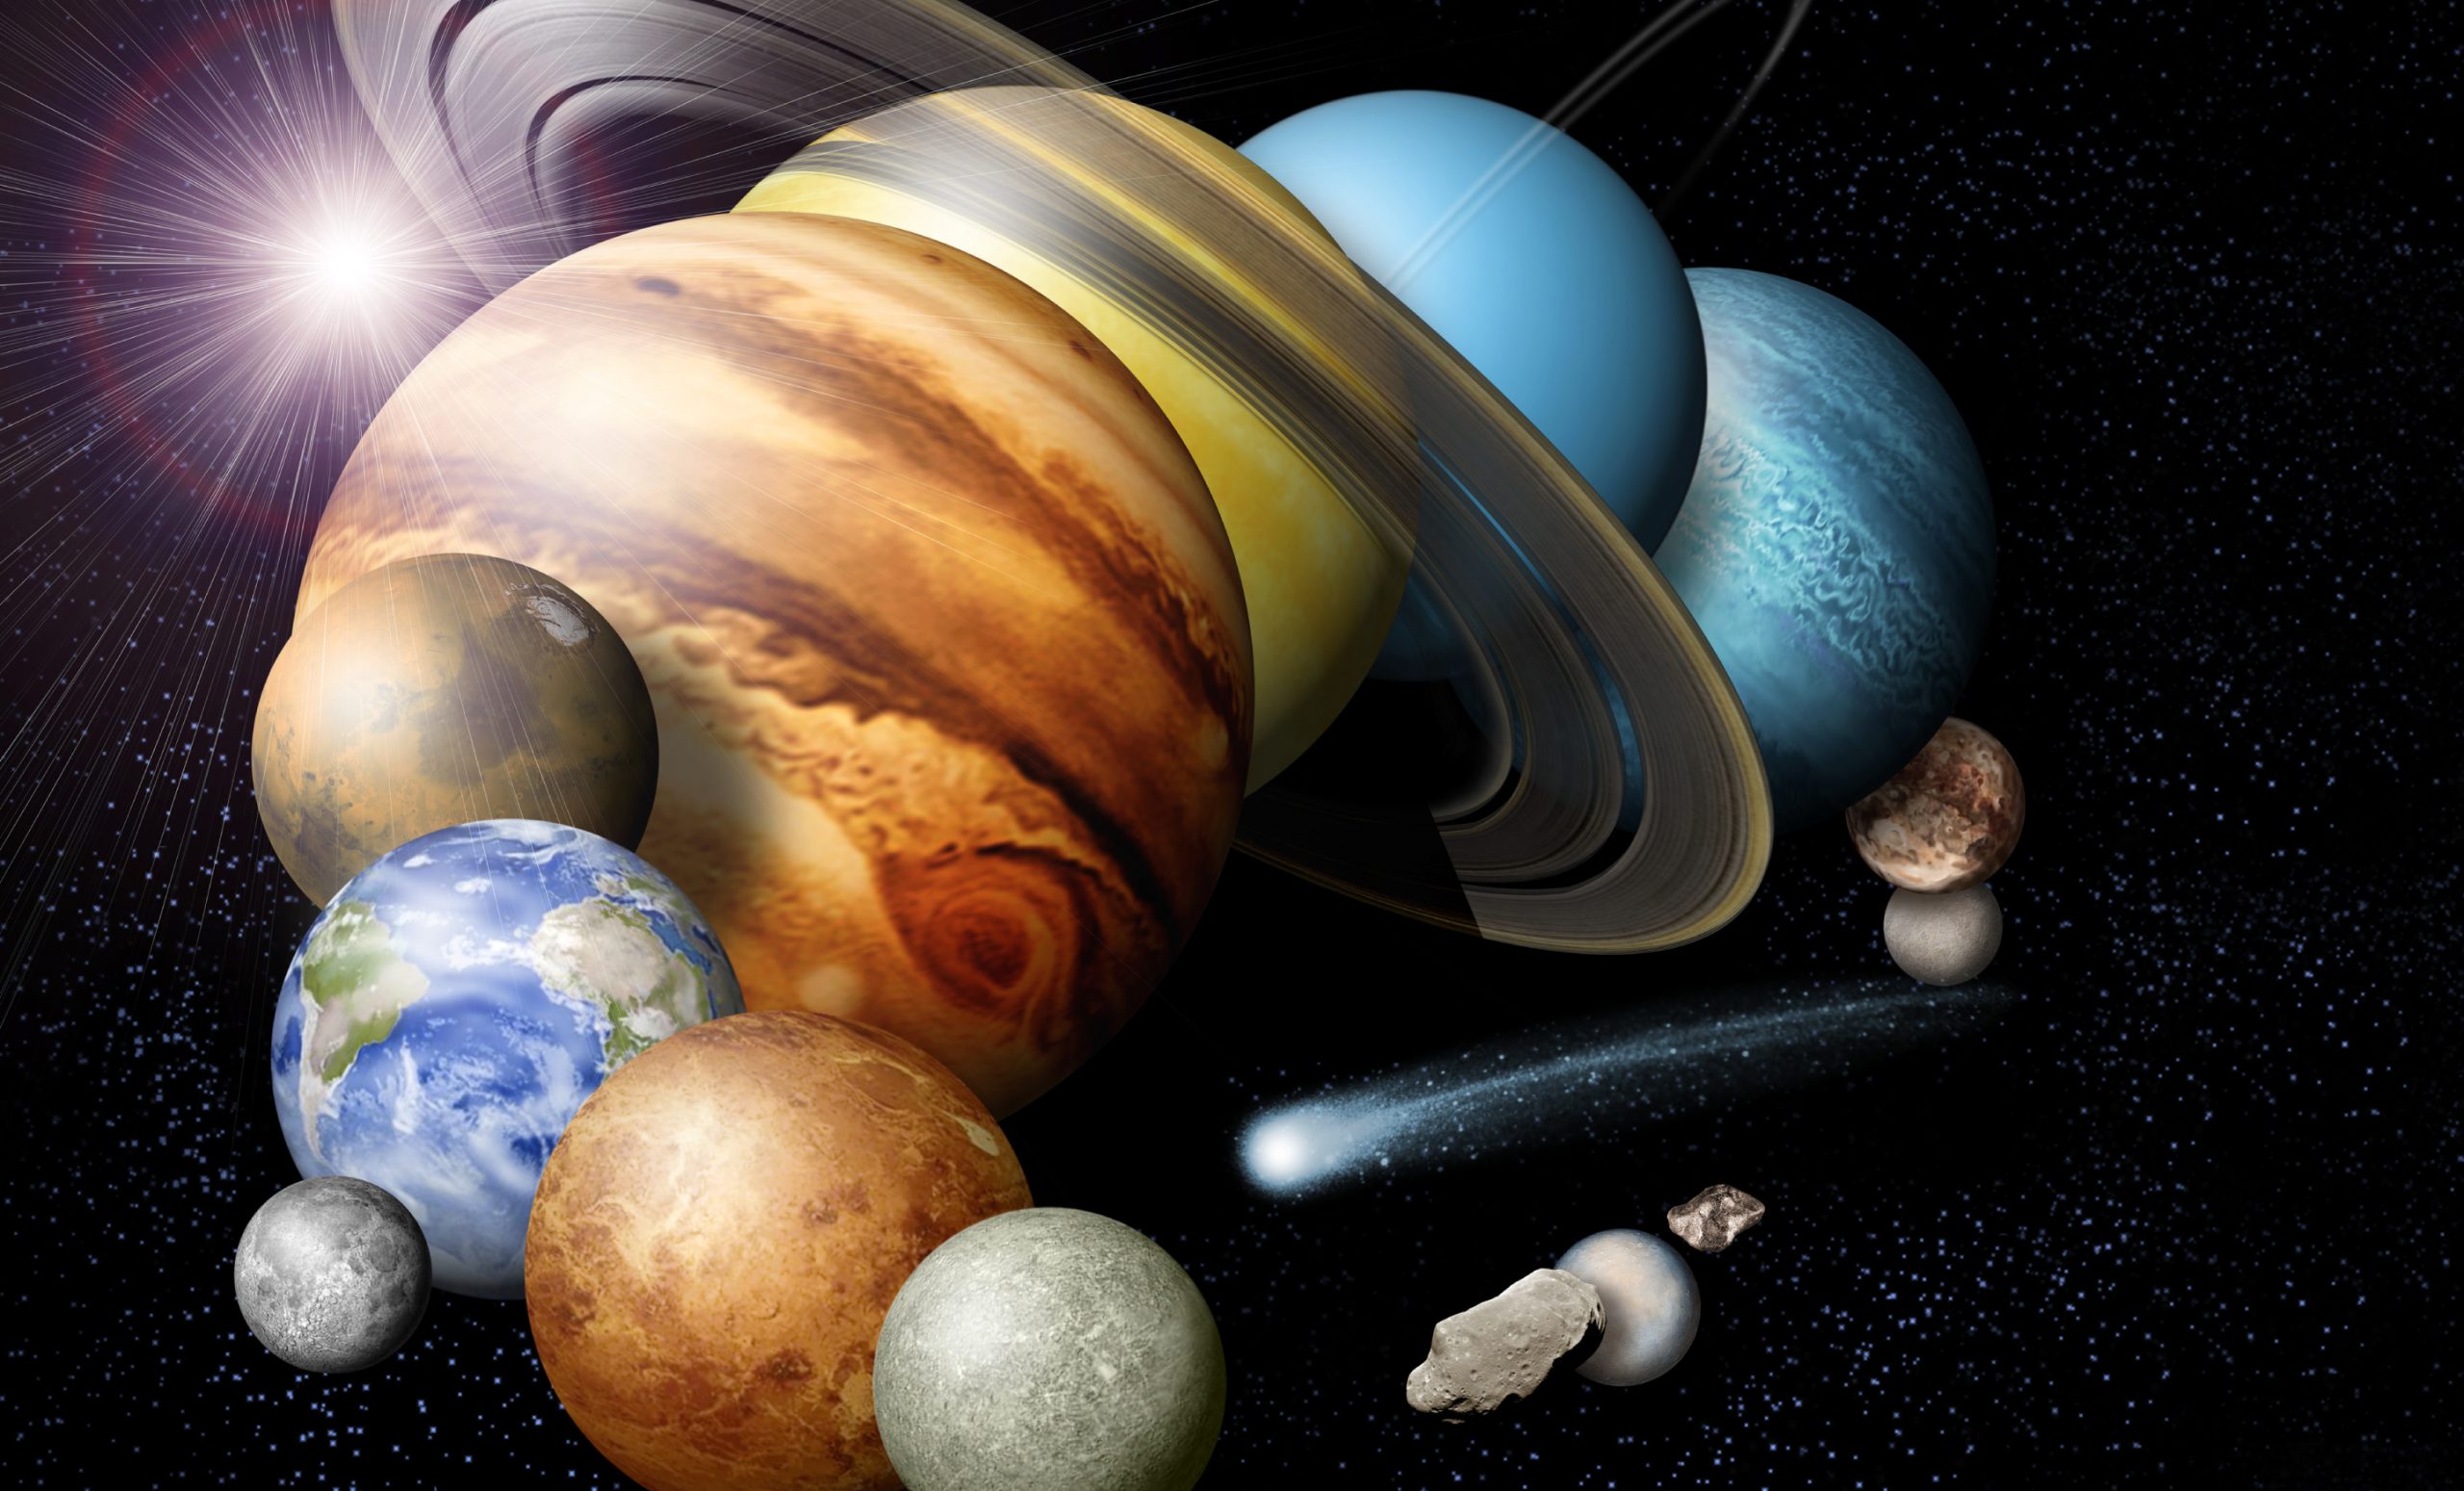 Solar system simulation reveals planetary mystery